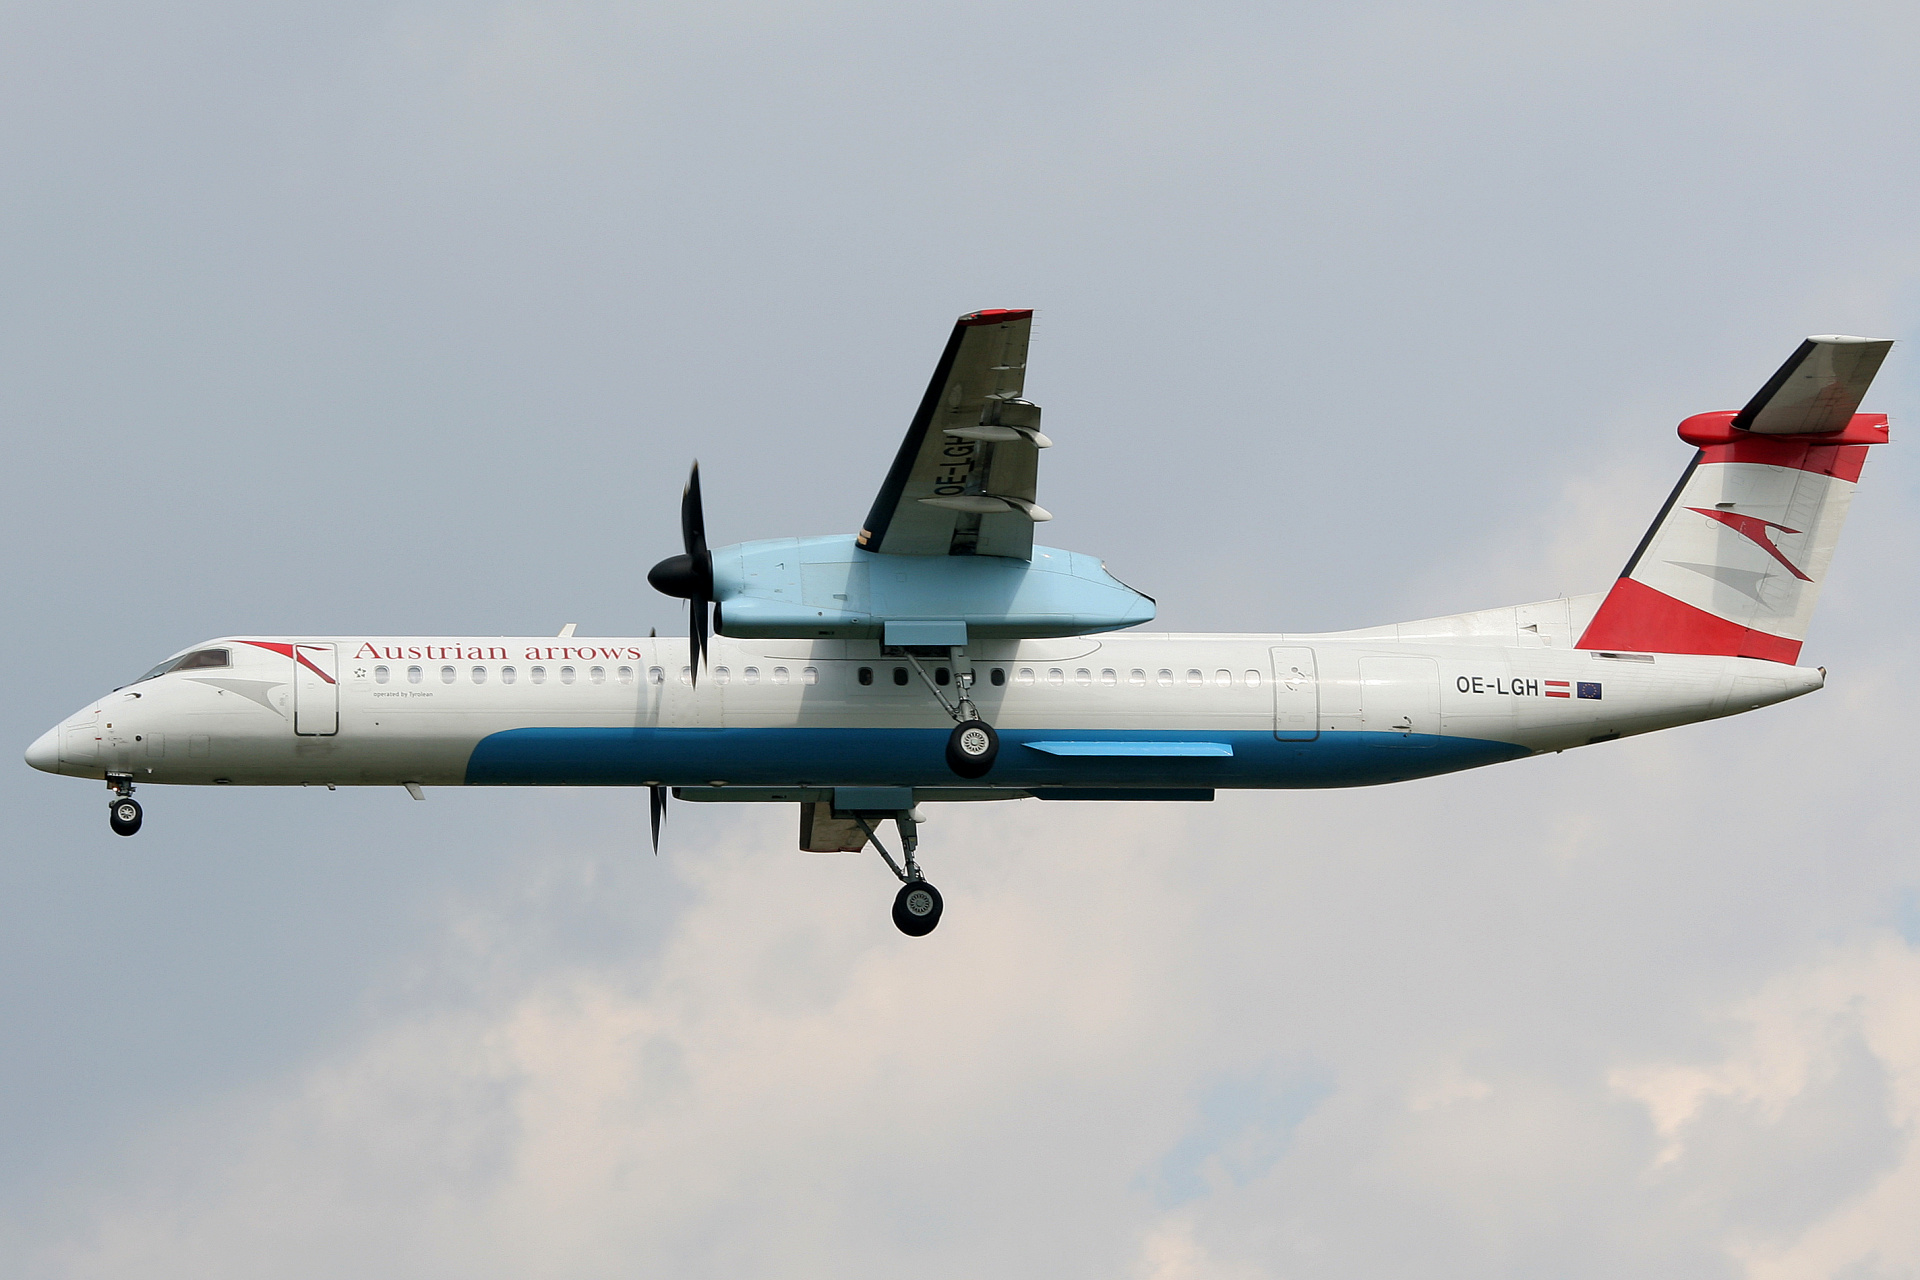 OE-LGH, Austrian arrows (Tyrolean) (Samoloty » Spotting na EPWA » De Havilland Canada DHC-8 Dash 8 » Austrian Airlines)